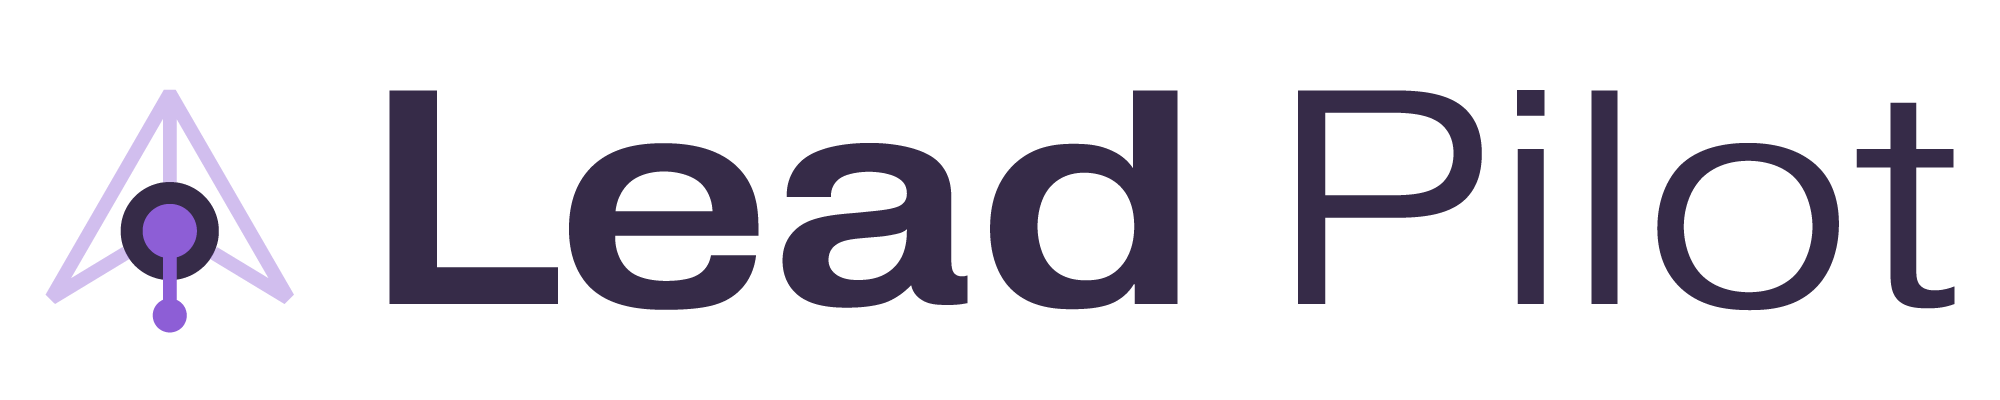 Lead Pilot Logo